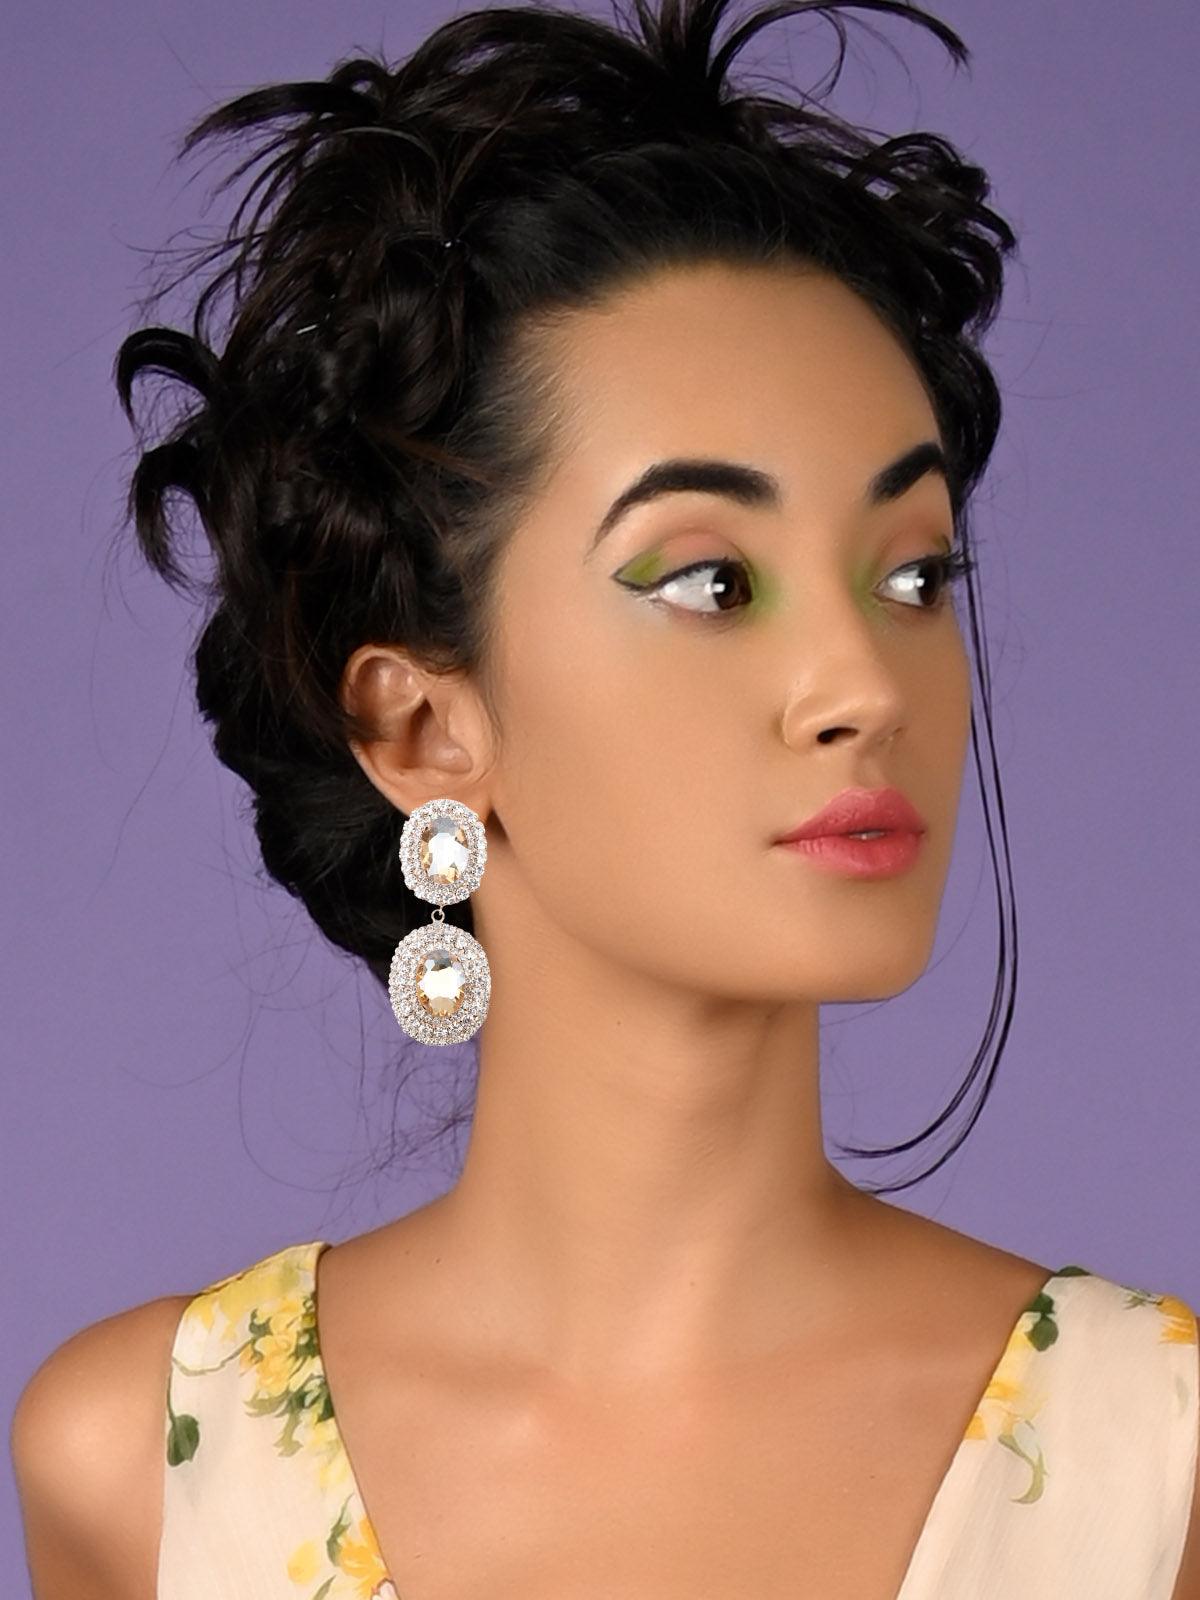 Crystal-embellished exquisite earrings - Odette